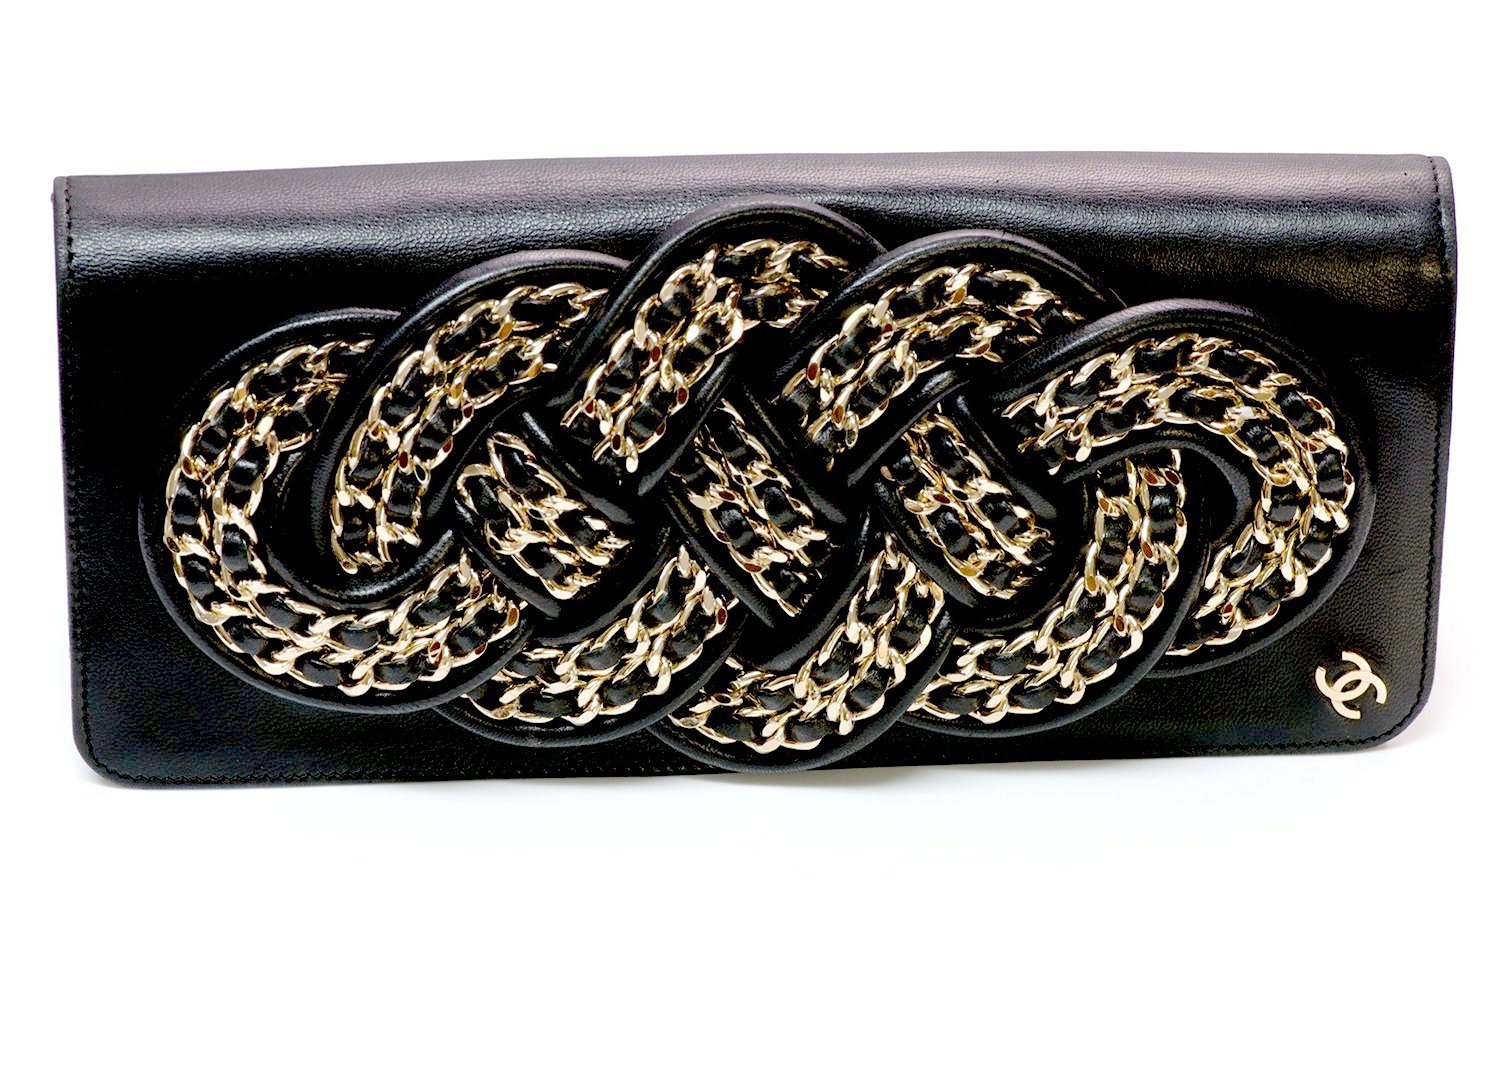 Chanel CC Black Leather Chain Clutch Bag